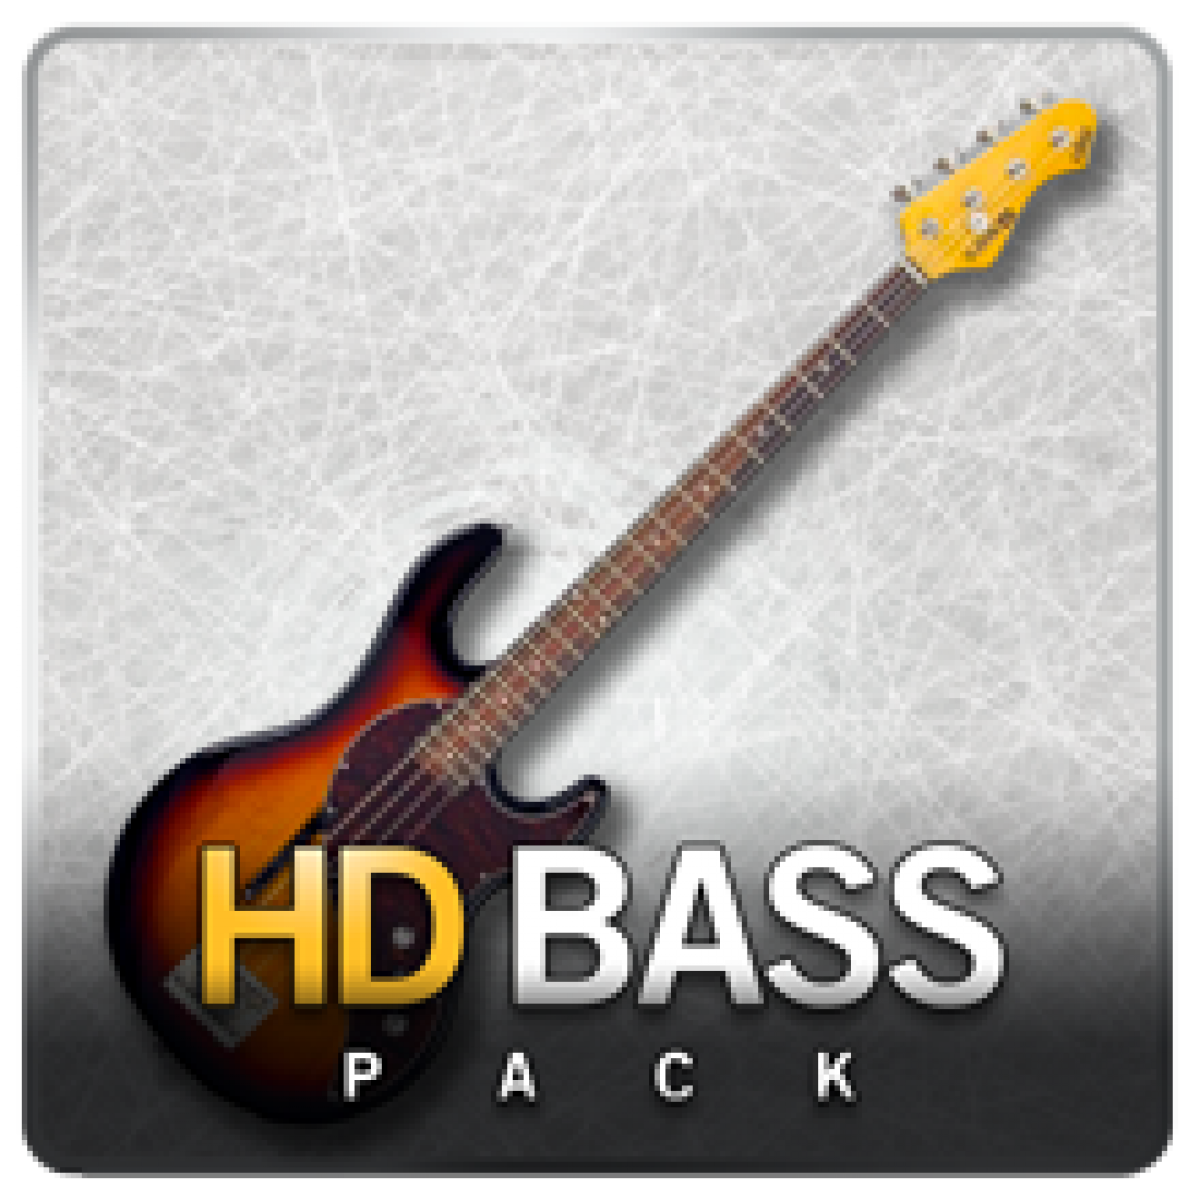 American Bass HD 18 Inch 1500